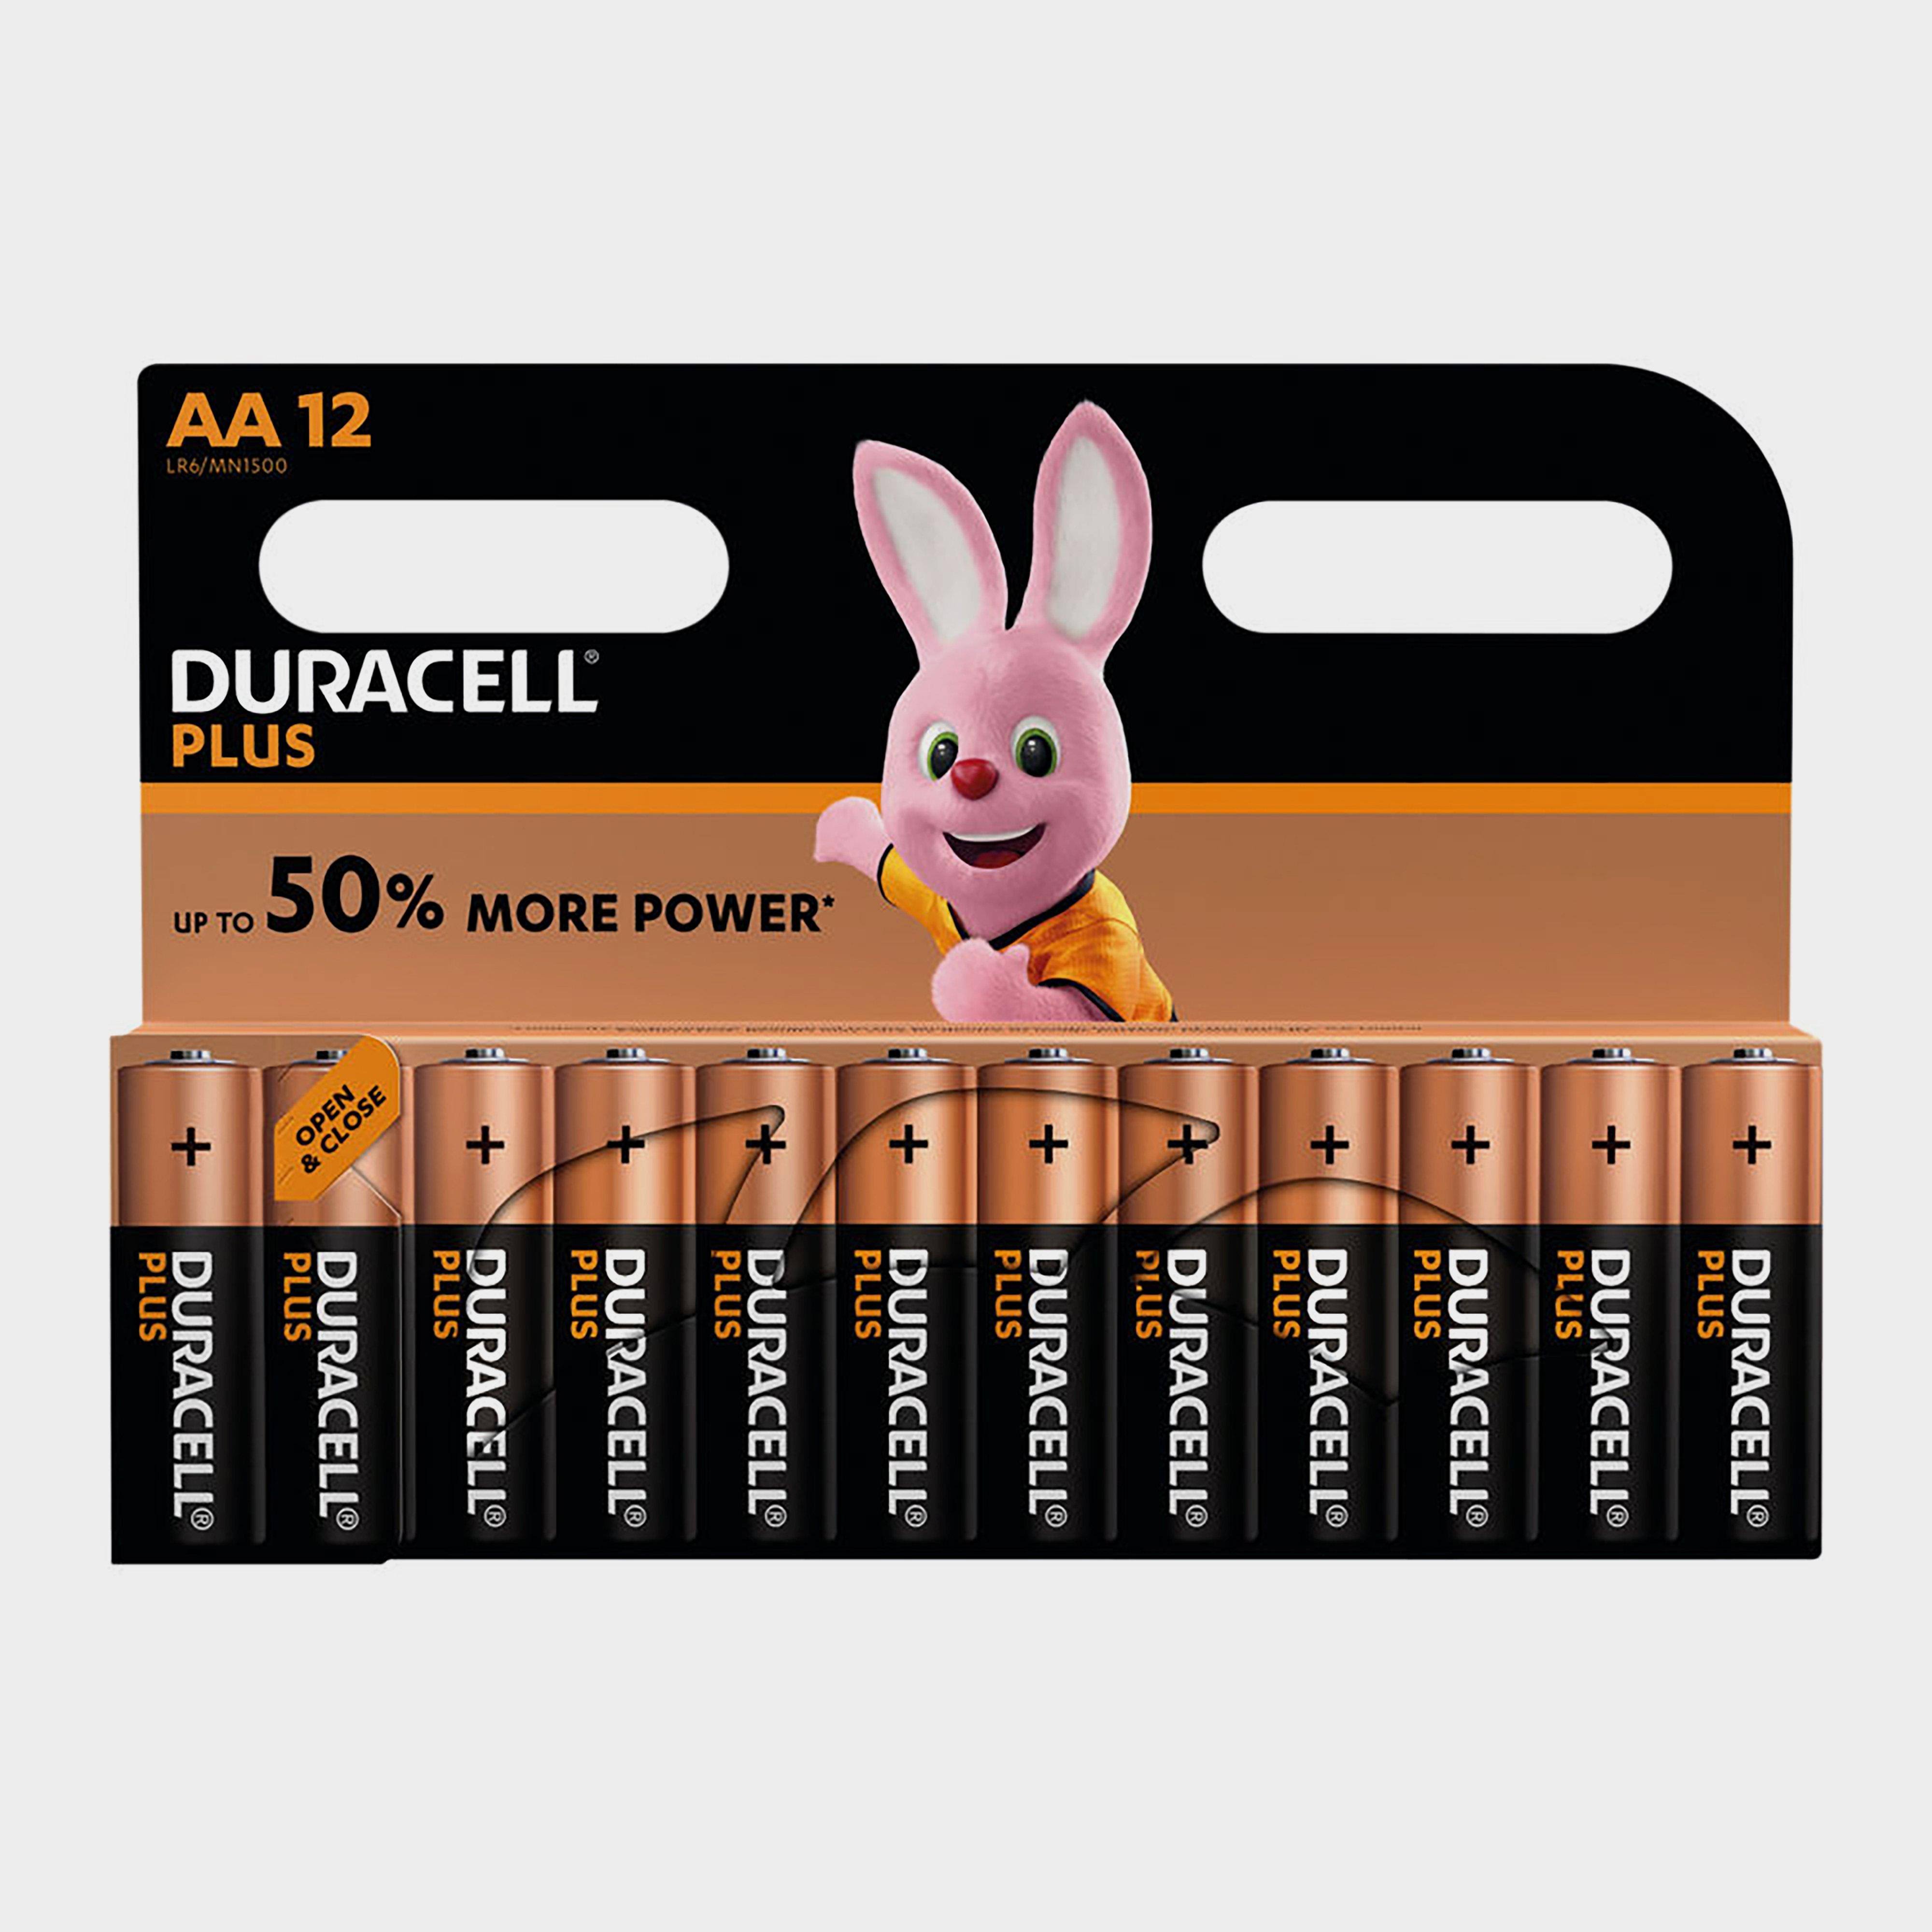 Duracell Plus Power Alkaline Batteries - 12 Pack, AA